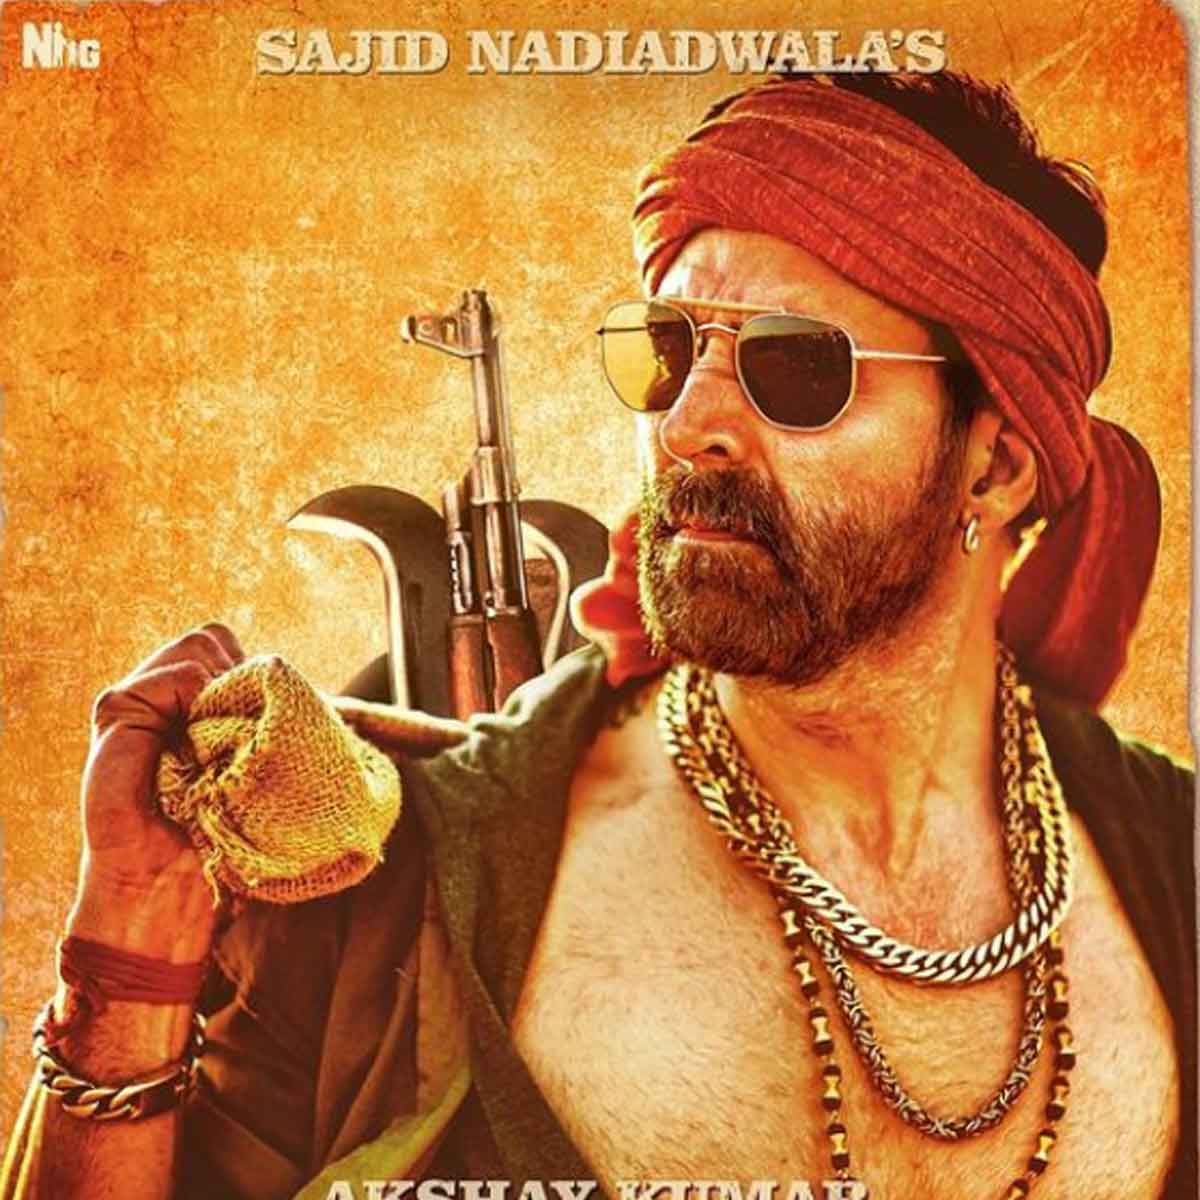 Exclusive: Akshay Kumar and Sajid Nadiadwala's Bachchan Pandey trailer to release on February 18?